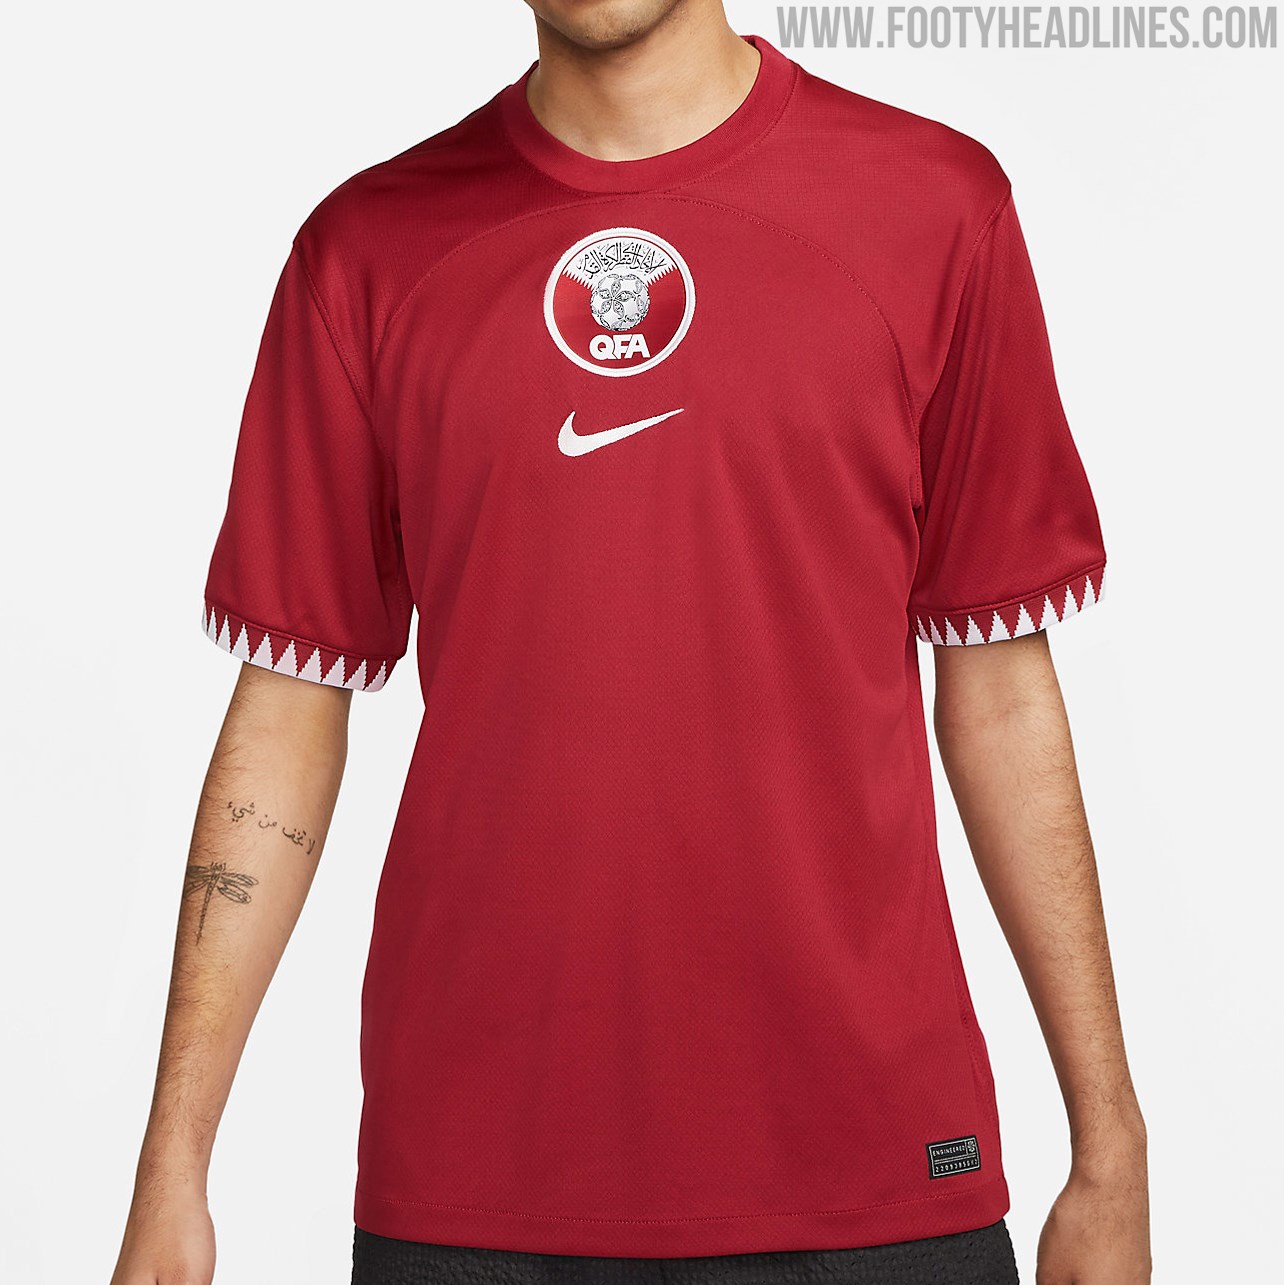 Qatar 2022 World Cup Home & Away Kits Released - Footy Headlines